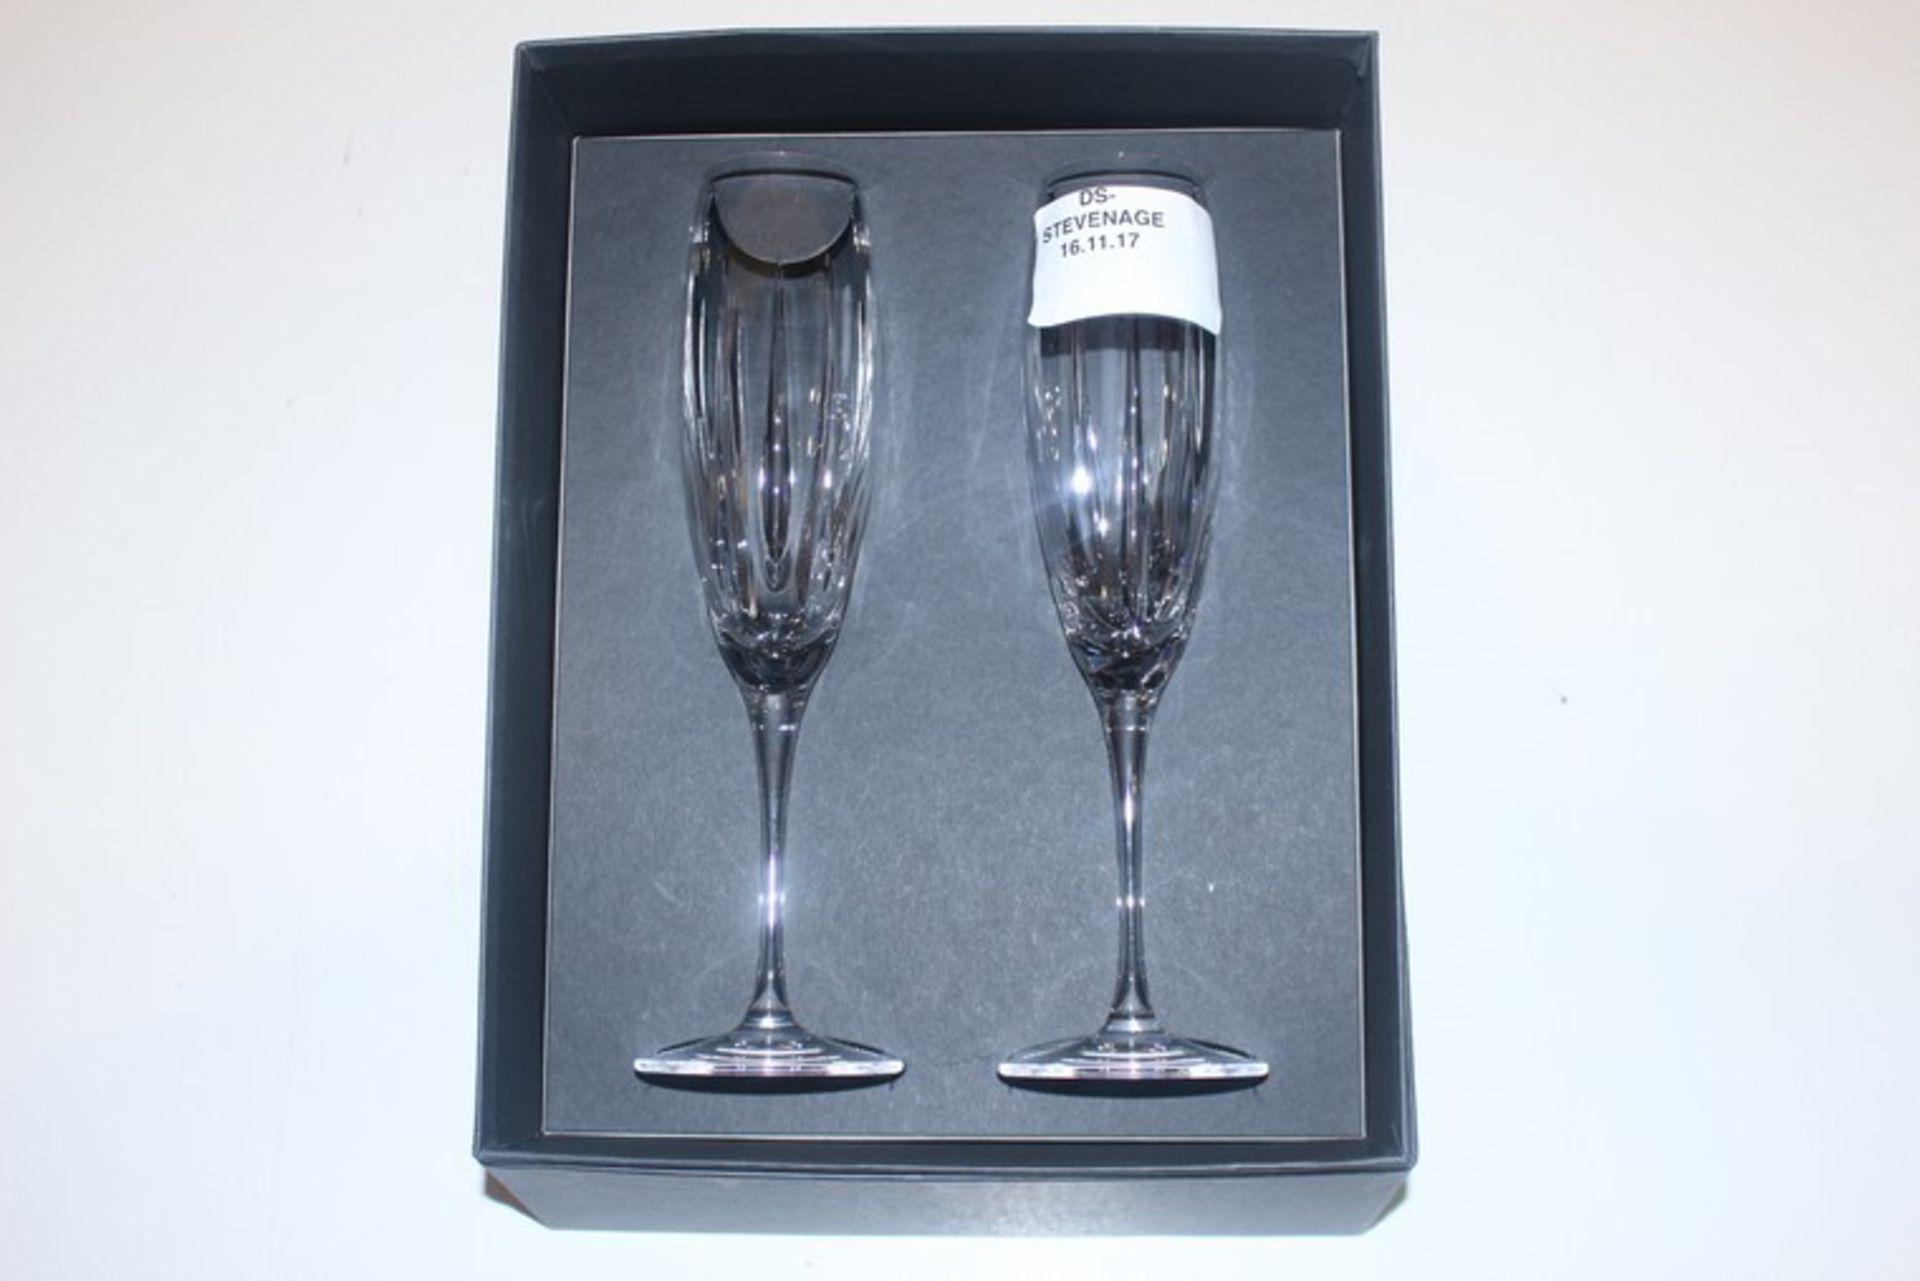 1 x BOXED SET OF JOHN LEWIS GLACIER CUT FLUTE GLASSES (16/11/17) *PLEASE NOTE THAT THE BID PRICE